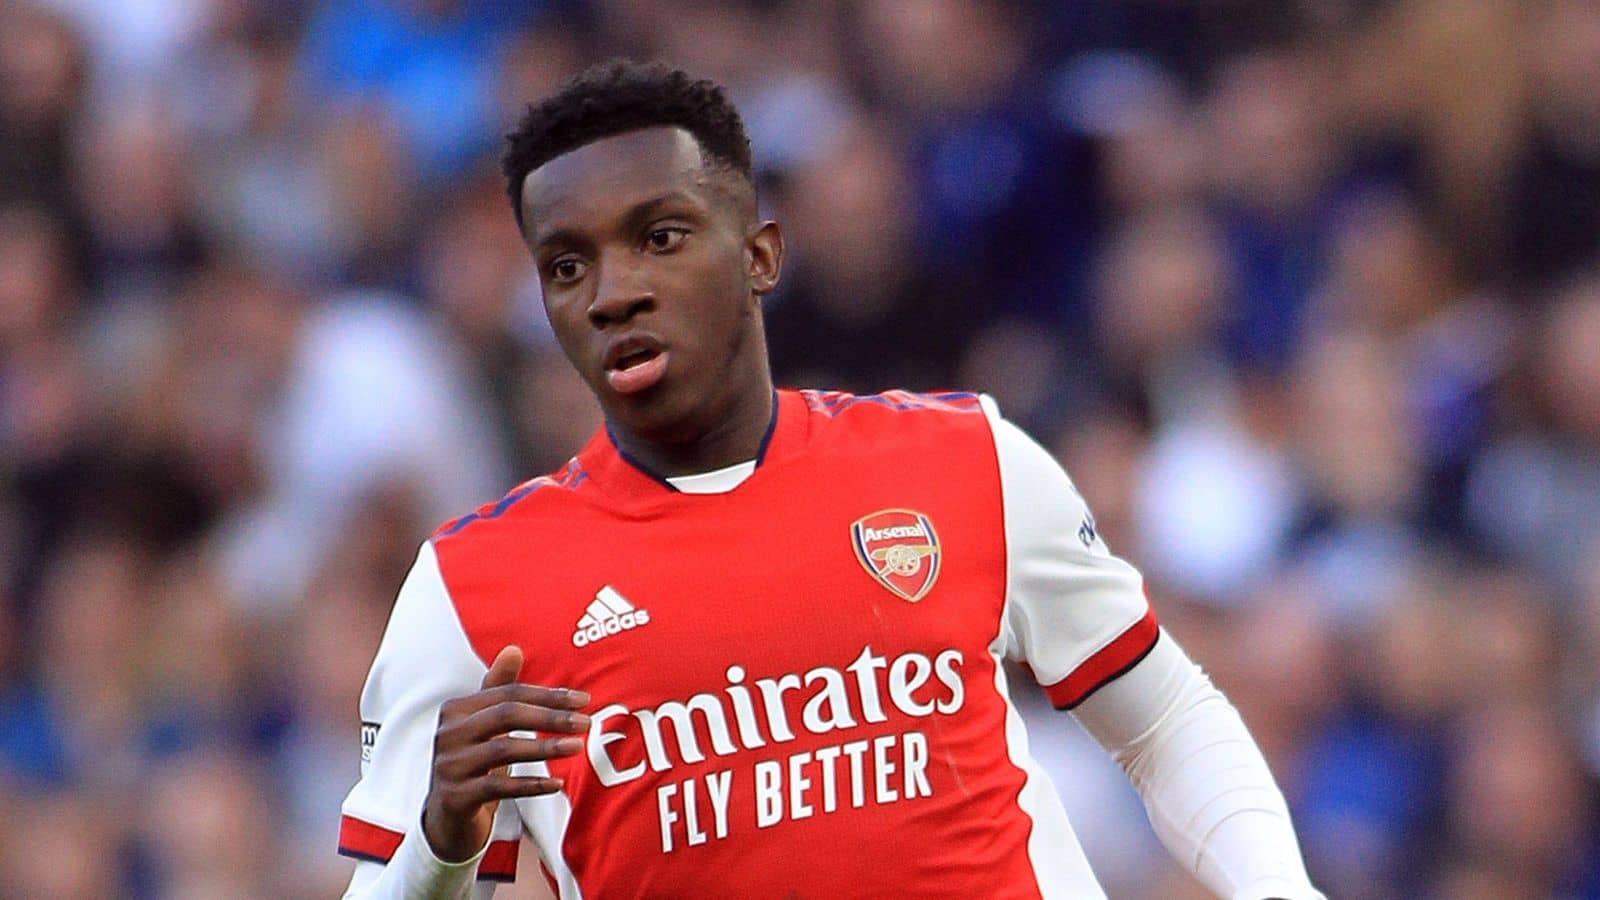 Eddie-Nketiah-Arsenal-striker